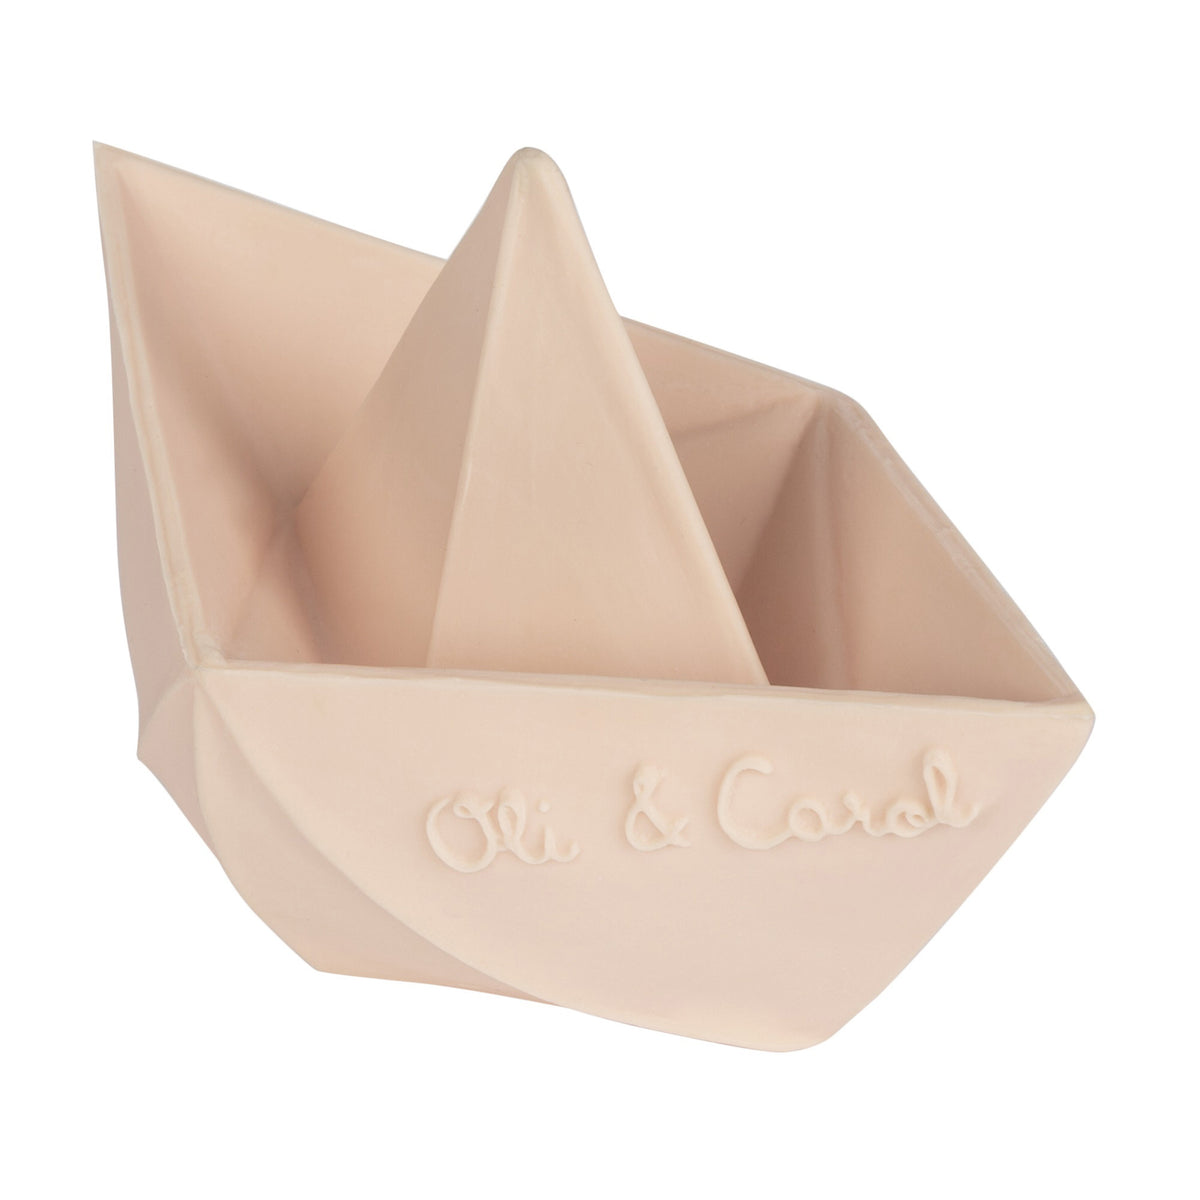 oli-&amp;-carol-origami-boat-nude- (1)